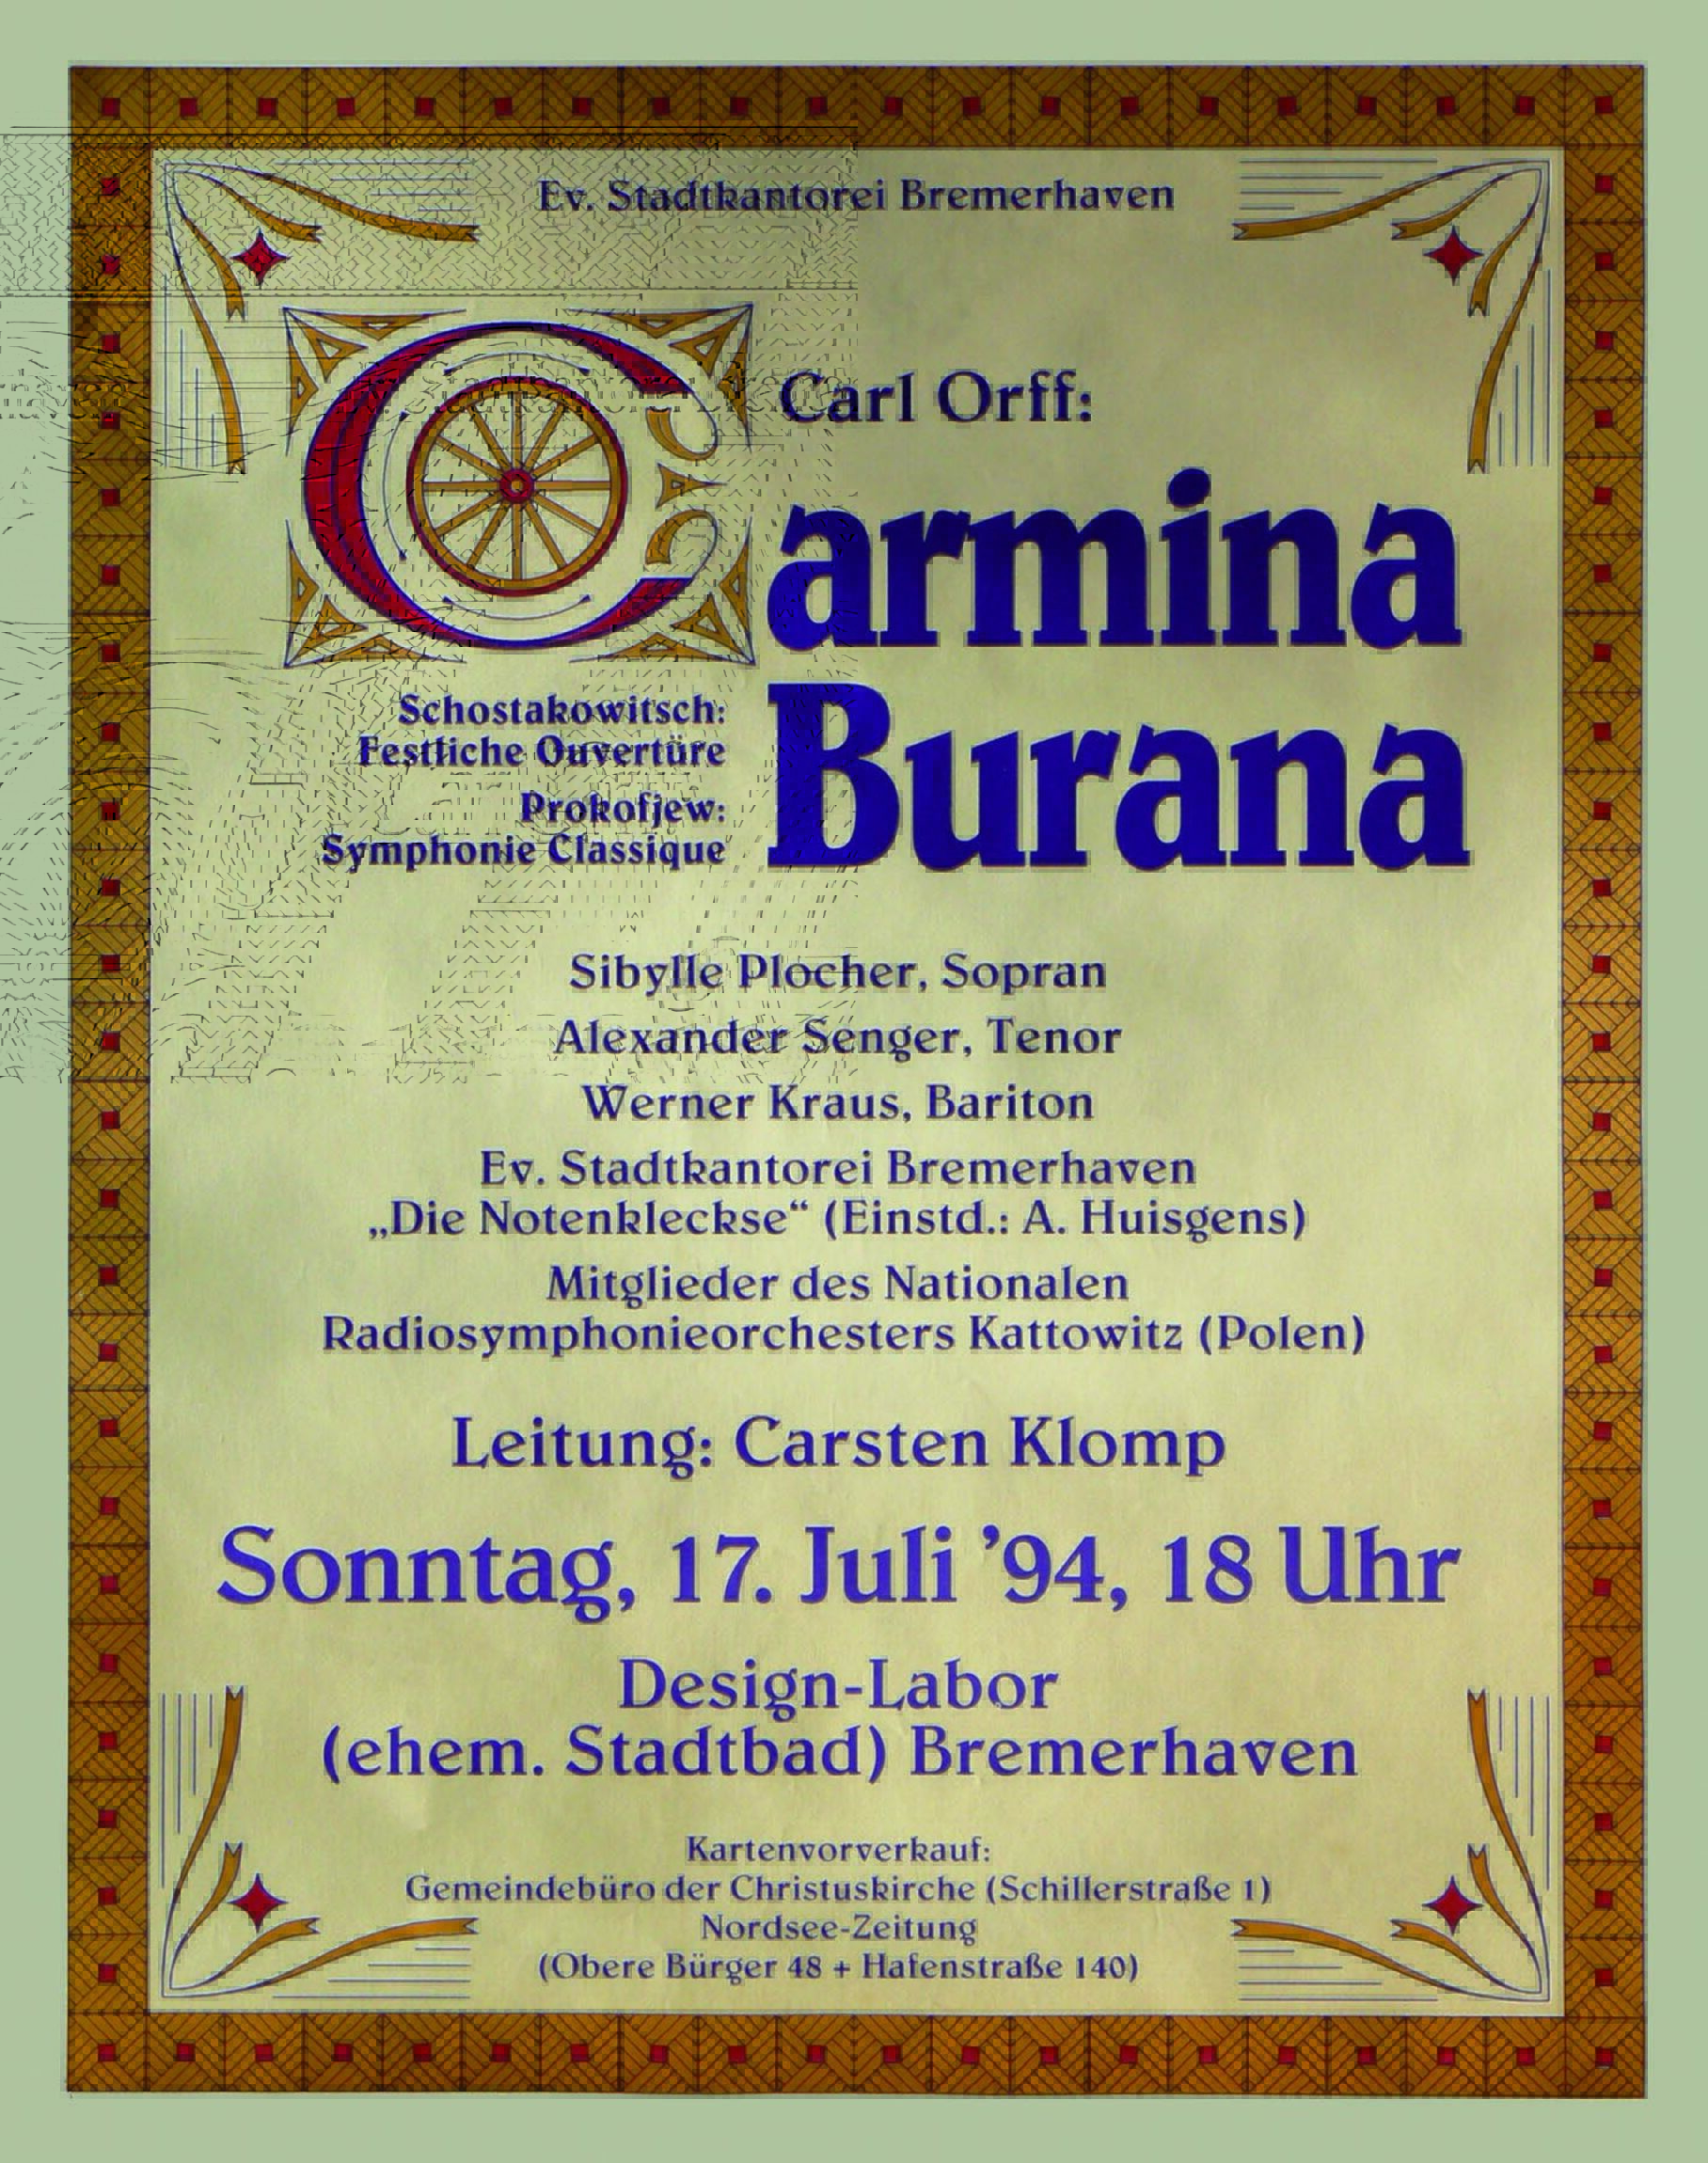 Plakat Carmina 1994